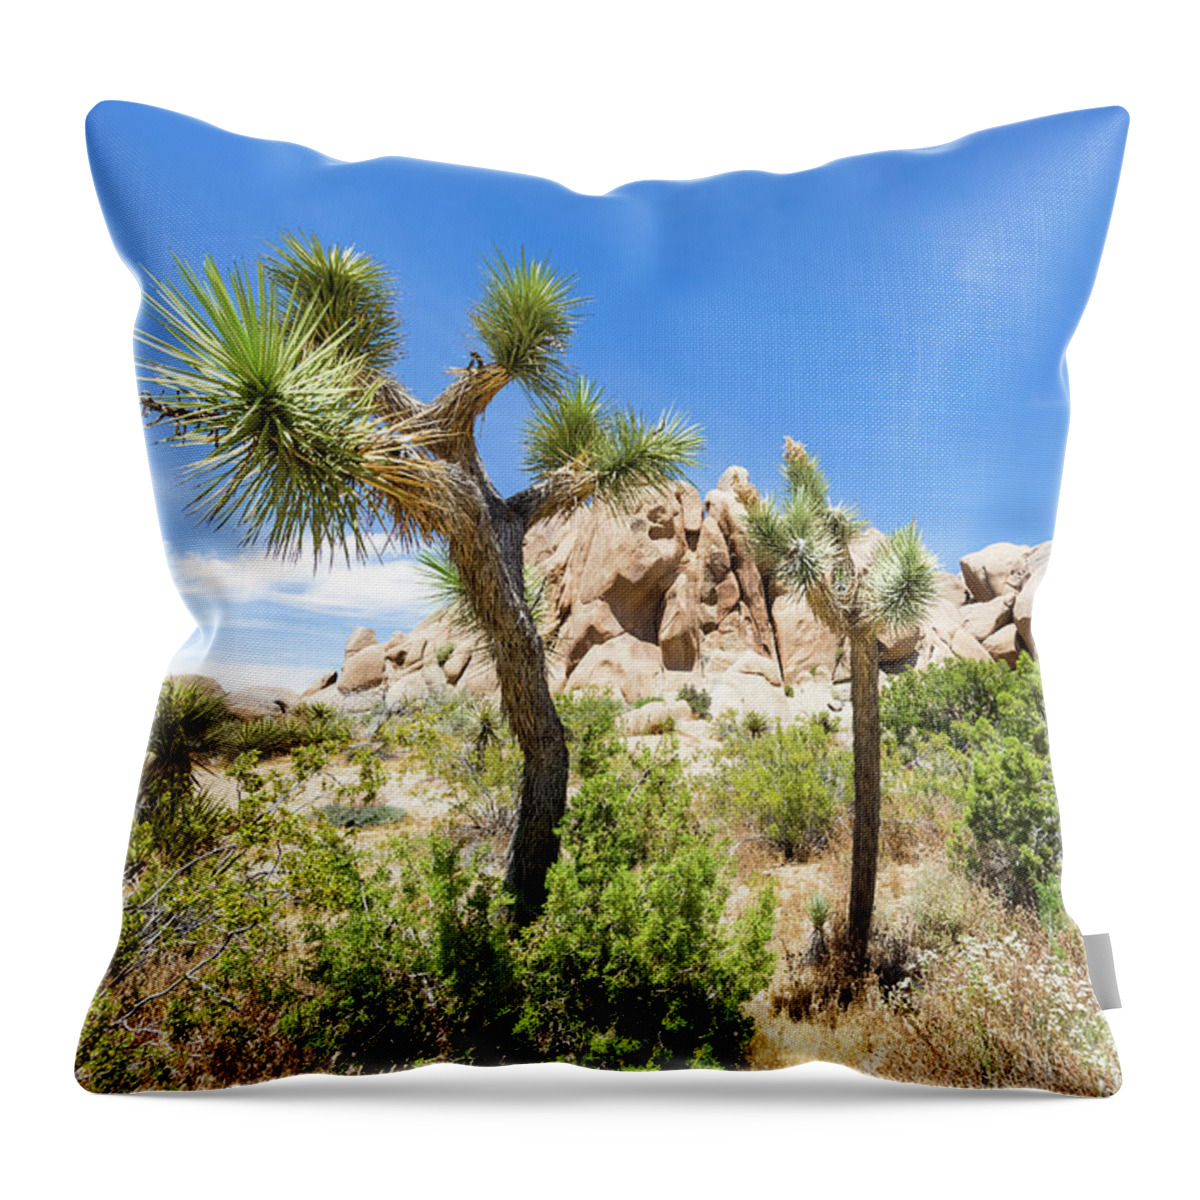 California Throw Pillow featuring the photograph Idyllic desert scenery - Joshua Tree National Park by Melanie Viola